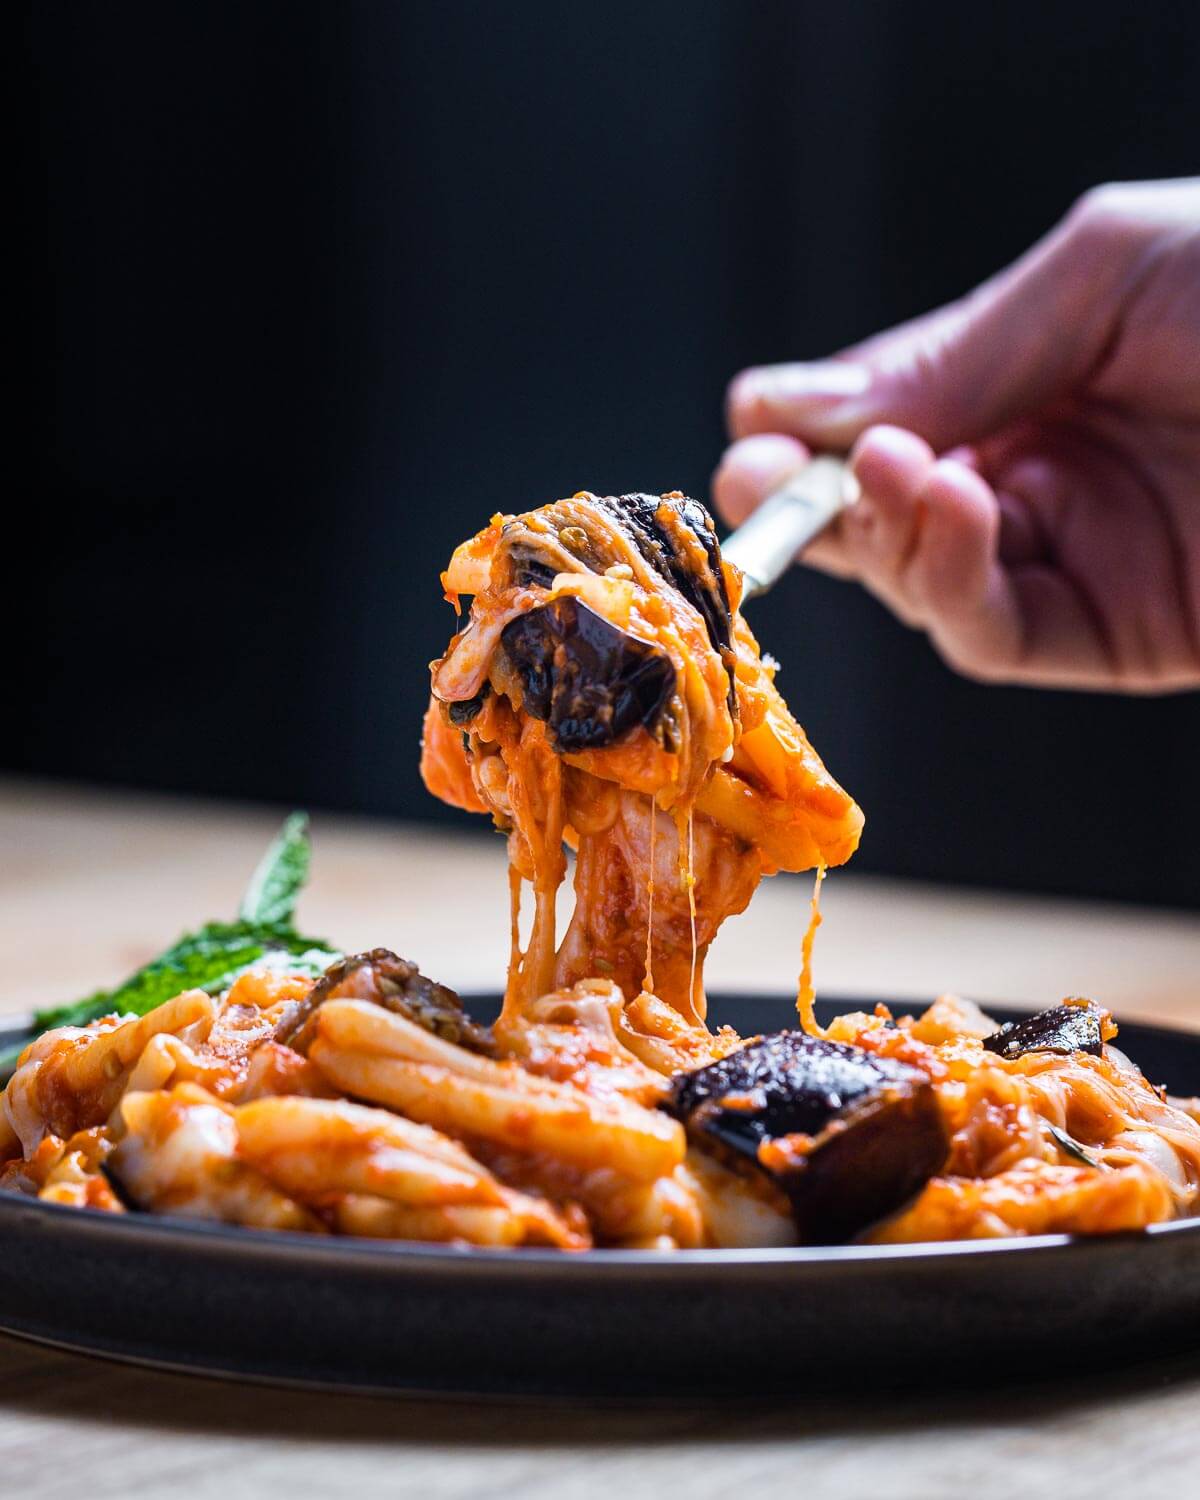 Pasta, eggplant, and mozzarella held in air with fork over plate of Pasta alla Siciliana.